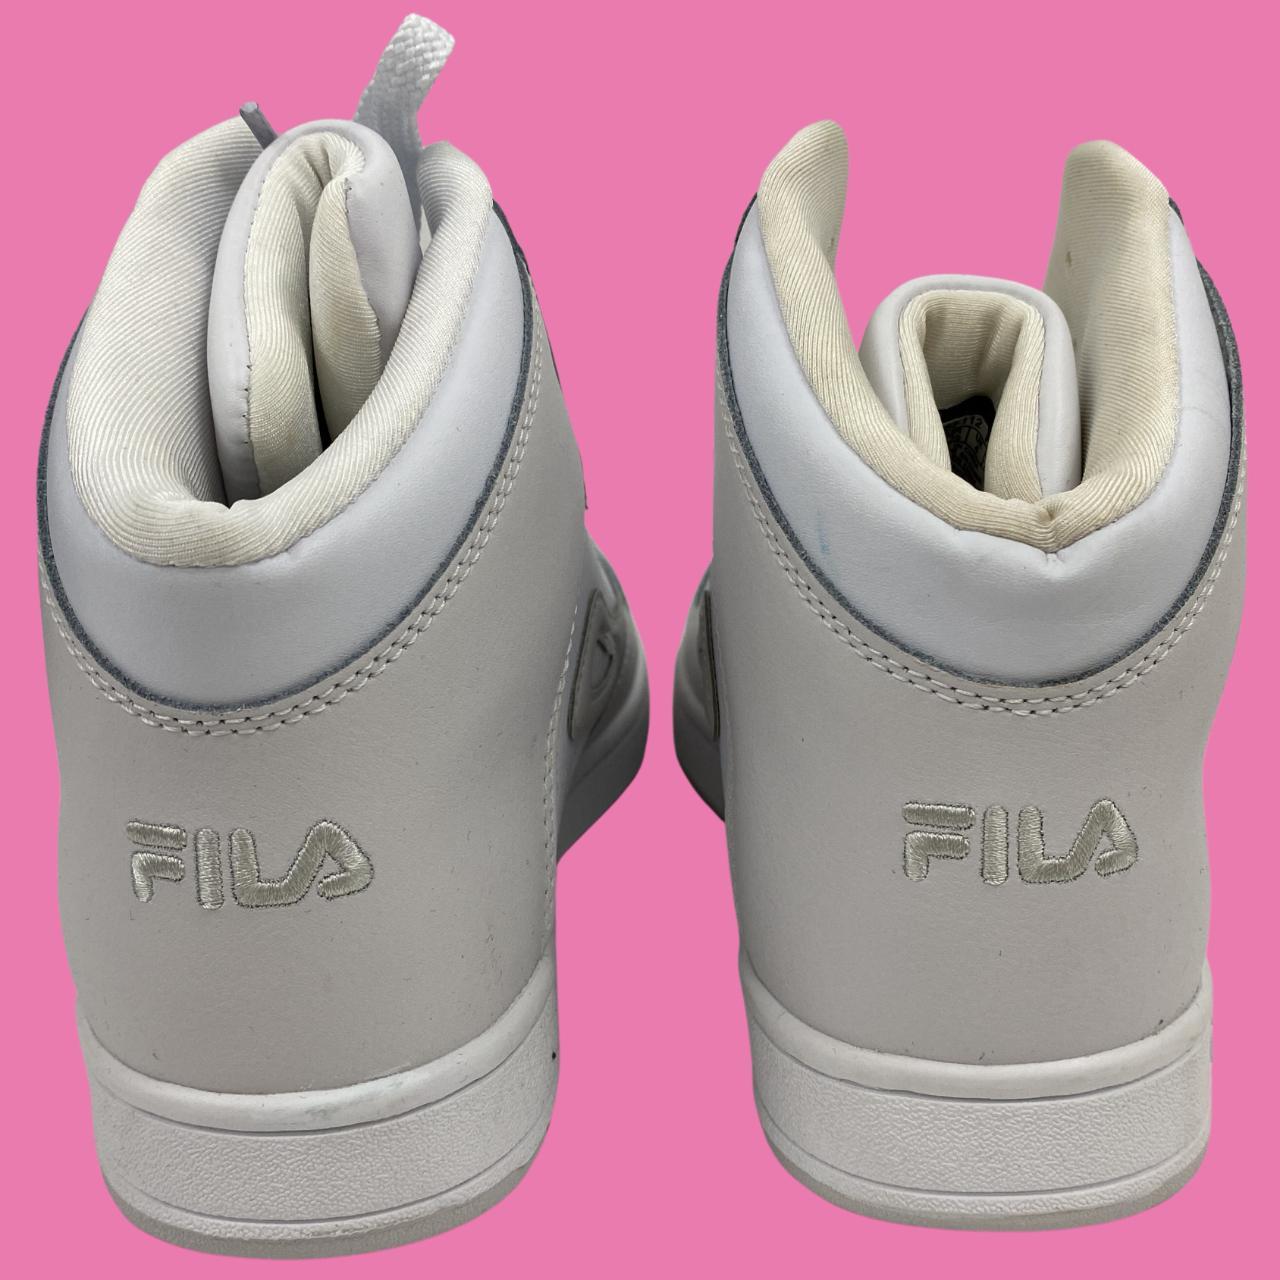 03BULKY01-MA FILA high top sneakers in white/ice... - Depop